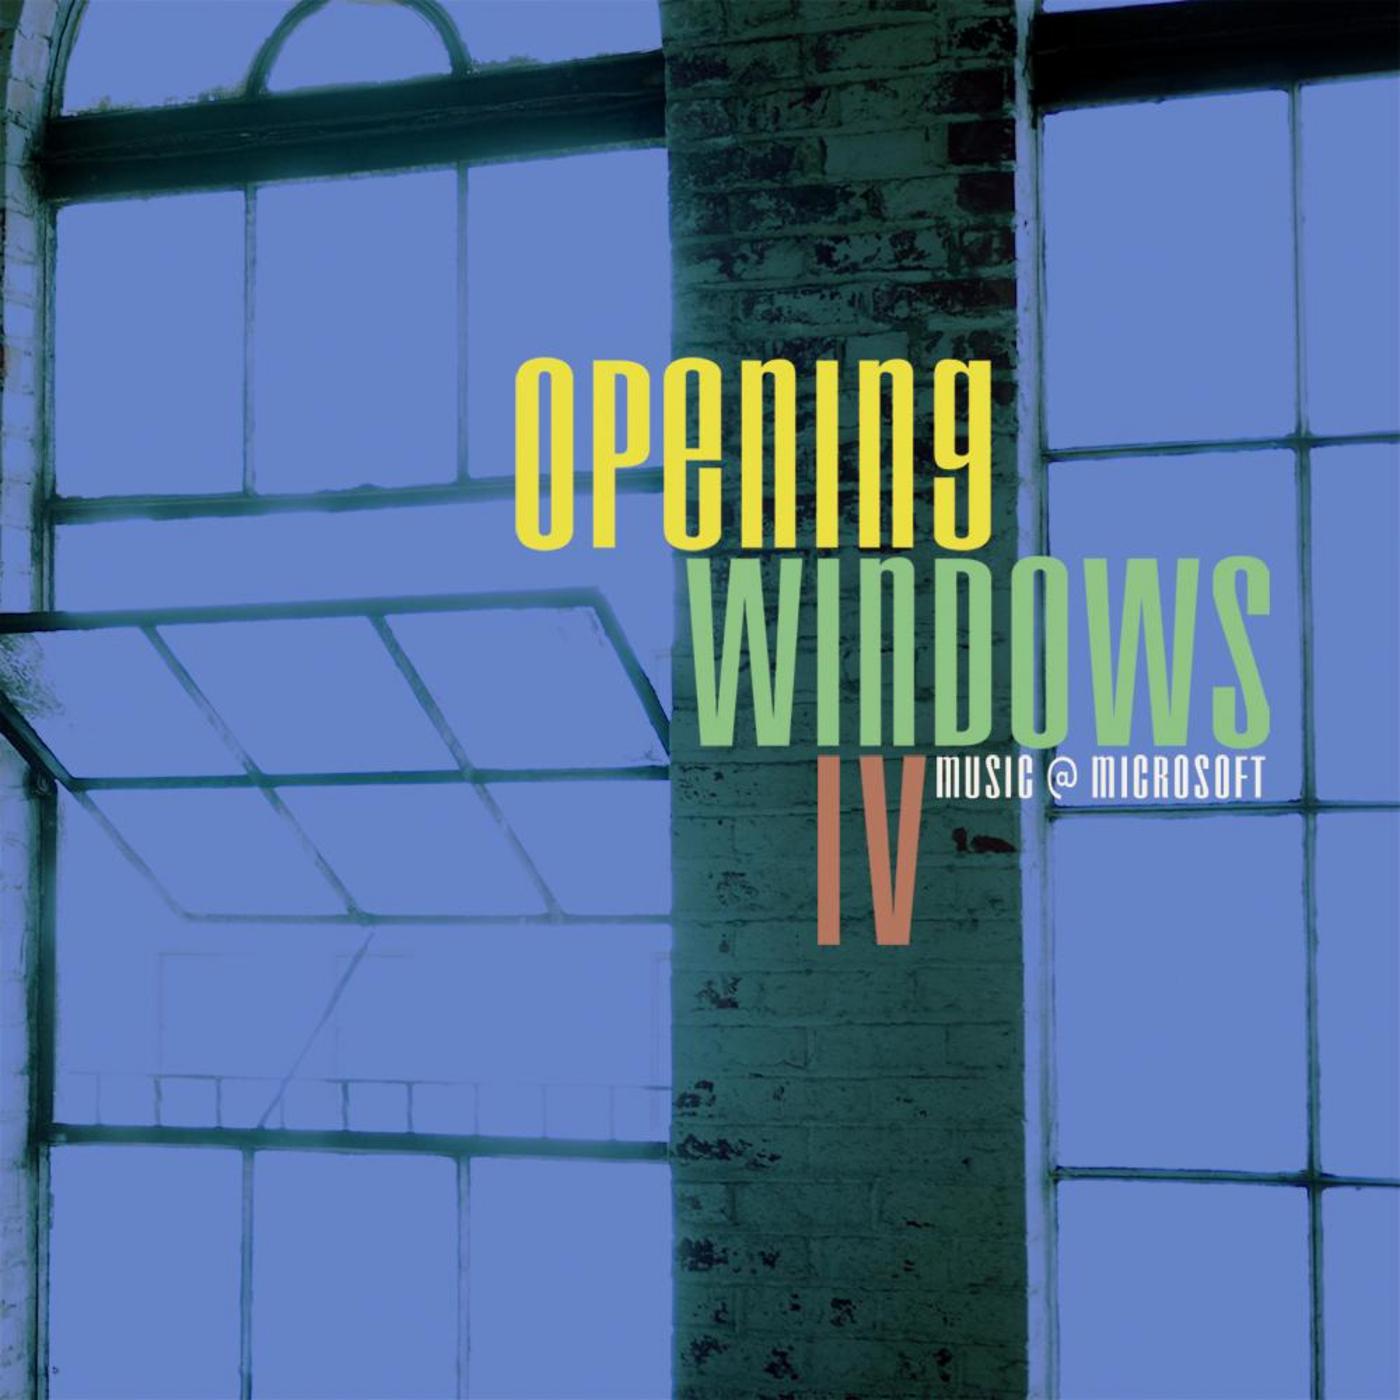 Musicians at Microsoft: Opening Windows, Vol. 4